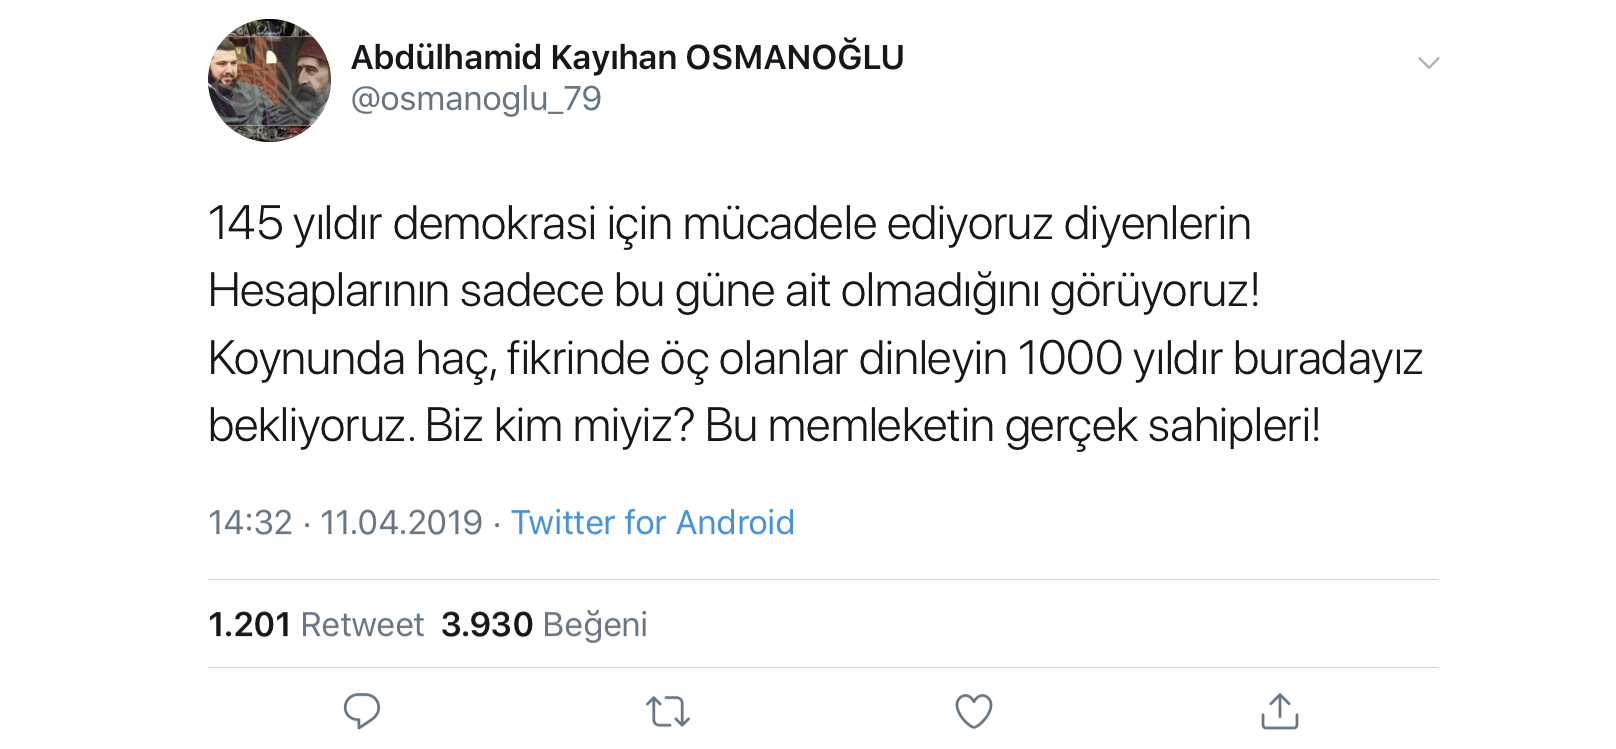 Abdülhamid Osmanoğlu Nun Attığı Tweet Uludağ Sözlük